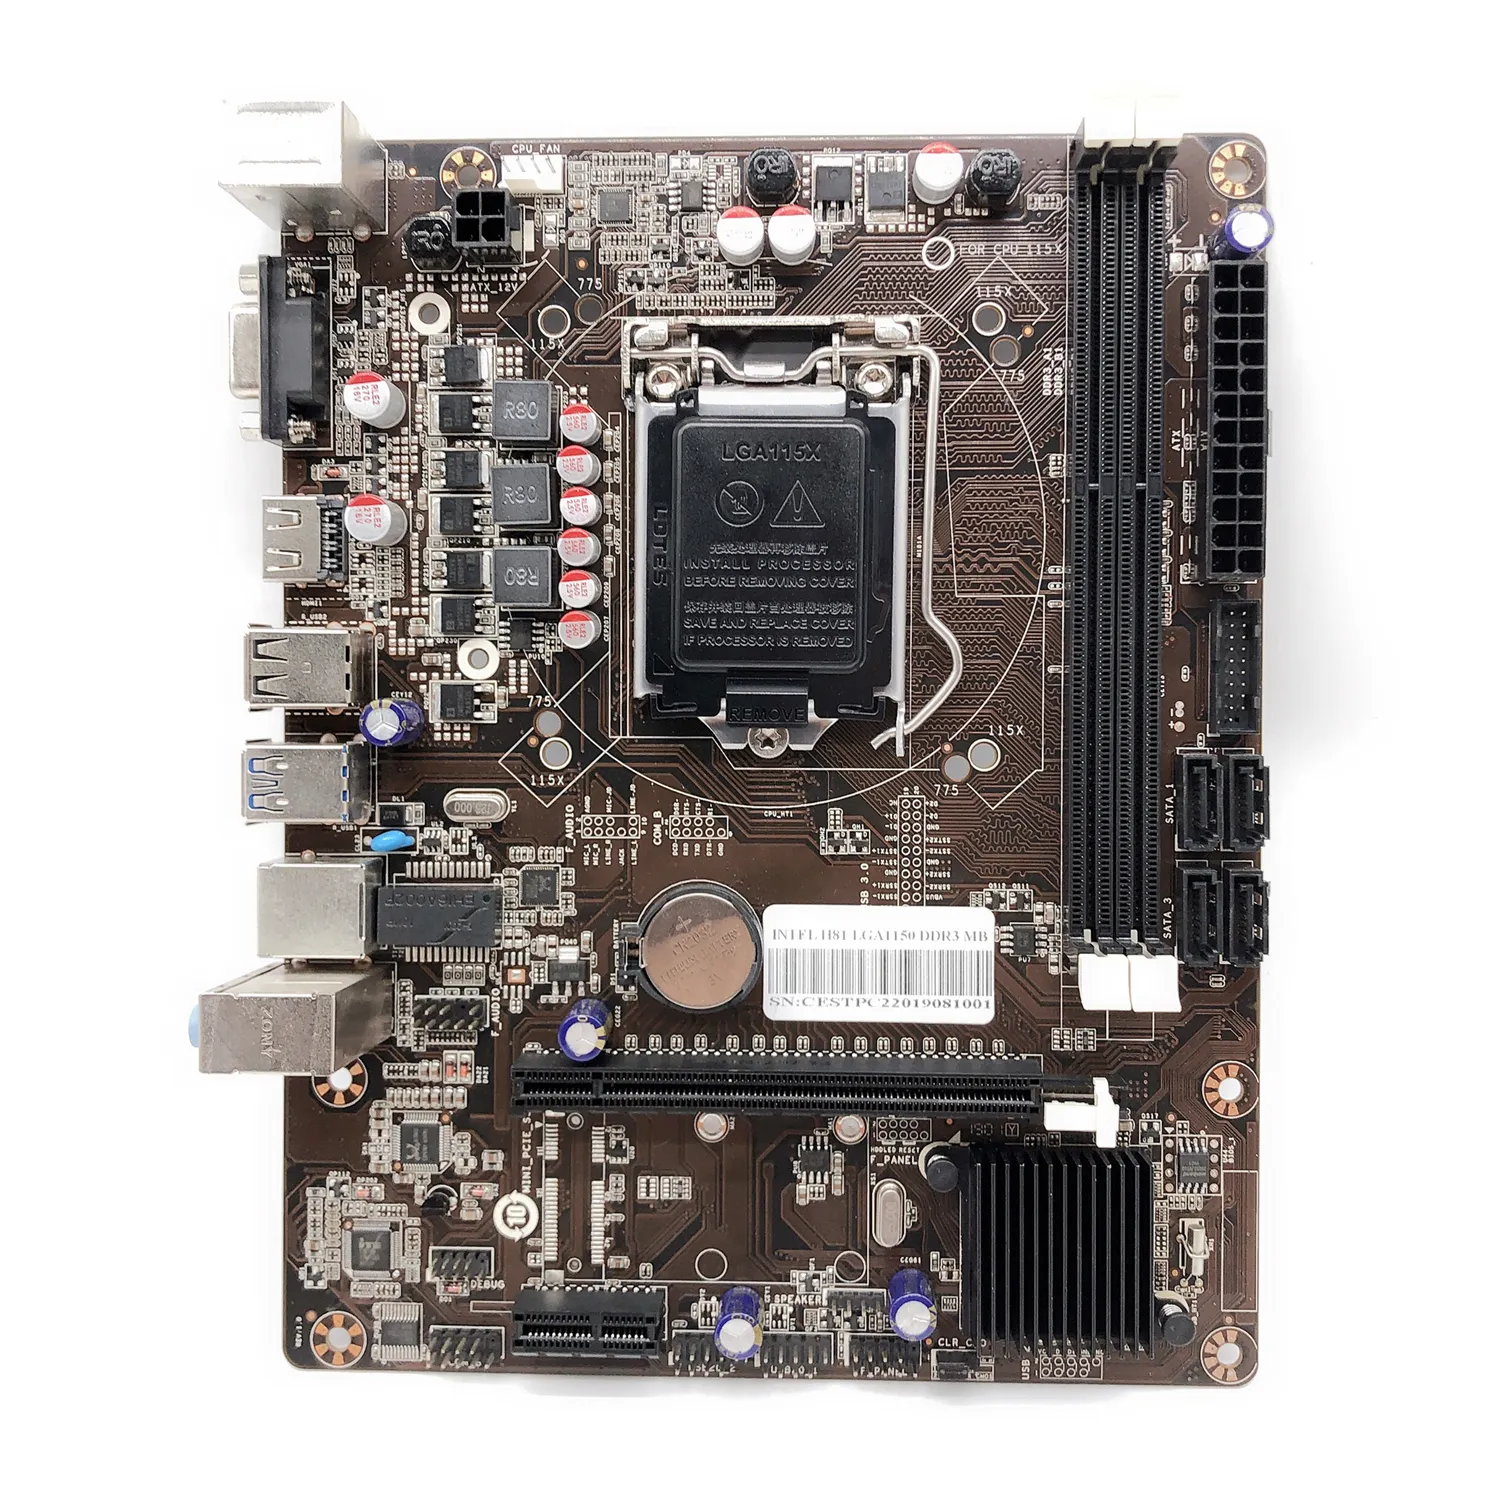 Bán Buôn Intel H81 Bo Mạch Chủ Ổ Cắm 1150 LGA Ddr3 Mẹ Board Với Mini-sata